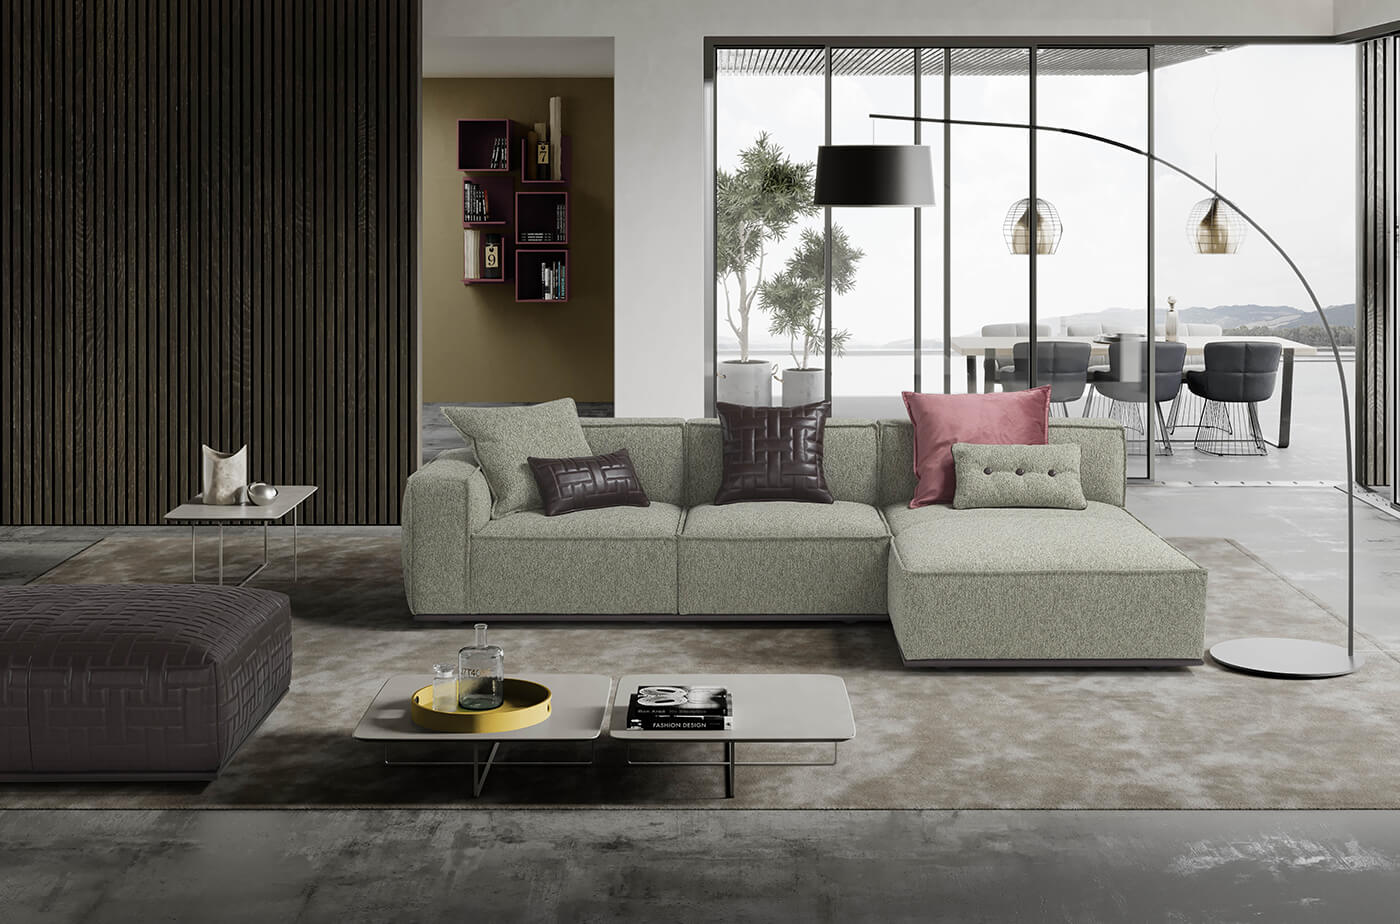 Plaza high comfort sofa by Egoitaliano | ReModern Living